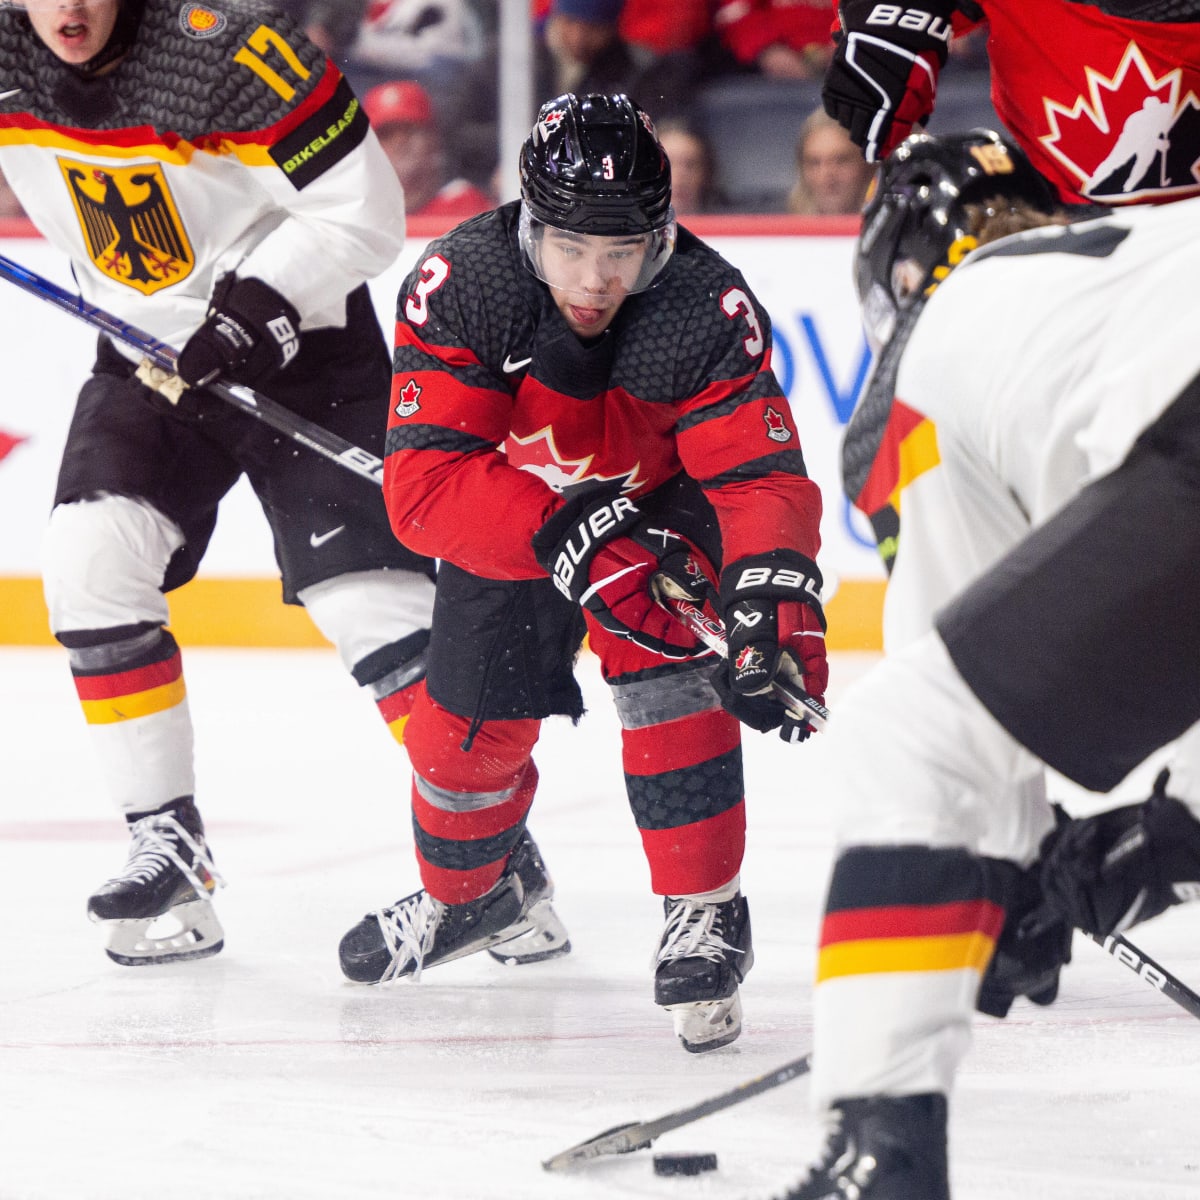 Austria vs Canada Free Live Stream IIHF World Junior Hockey - How to Watch and Stream Major League and College Sports